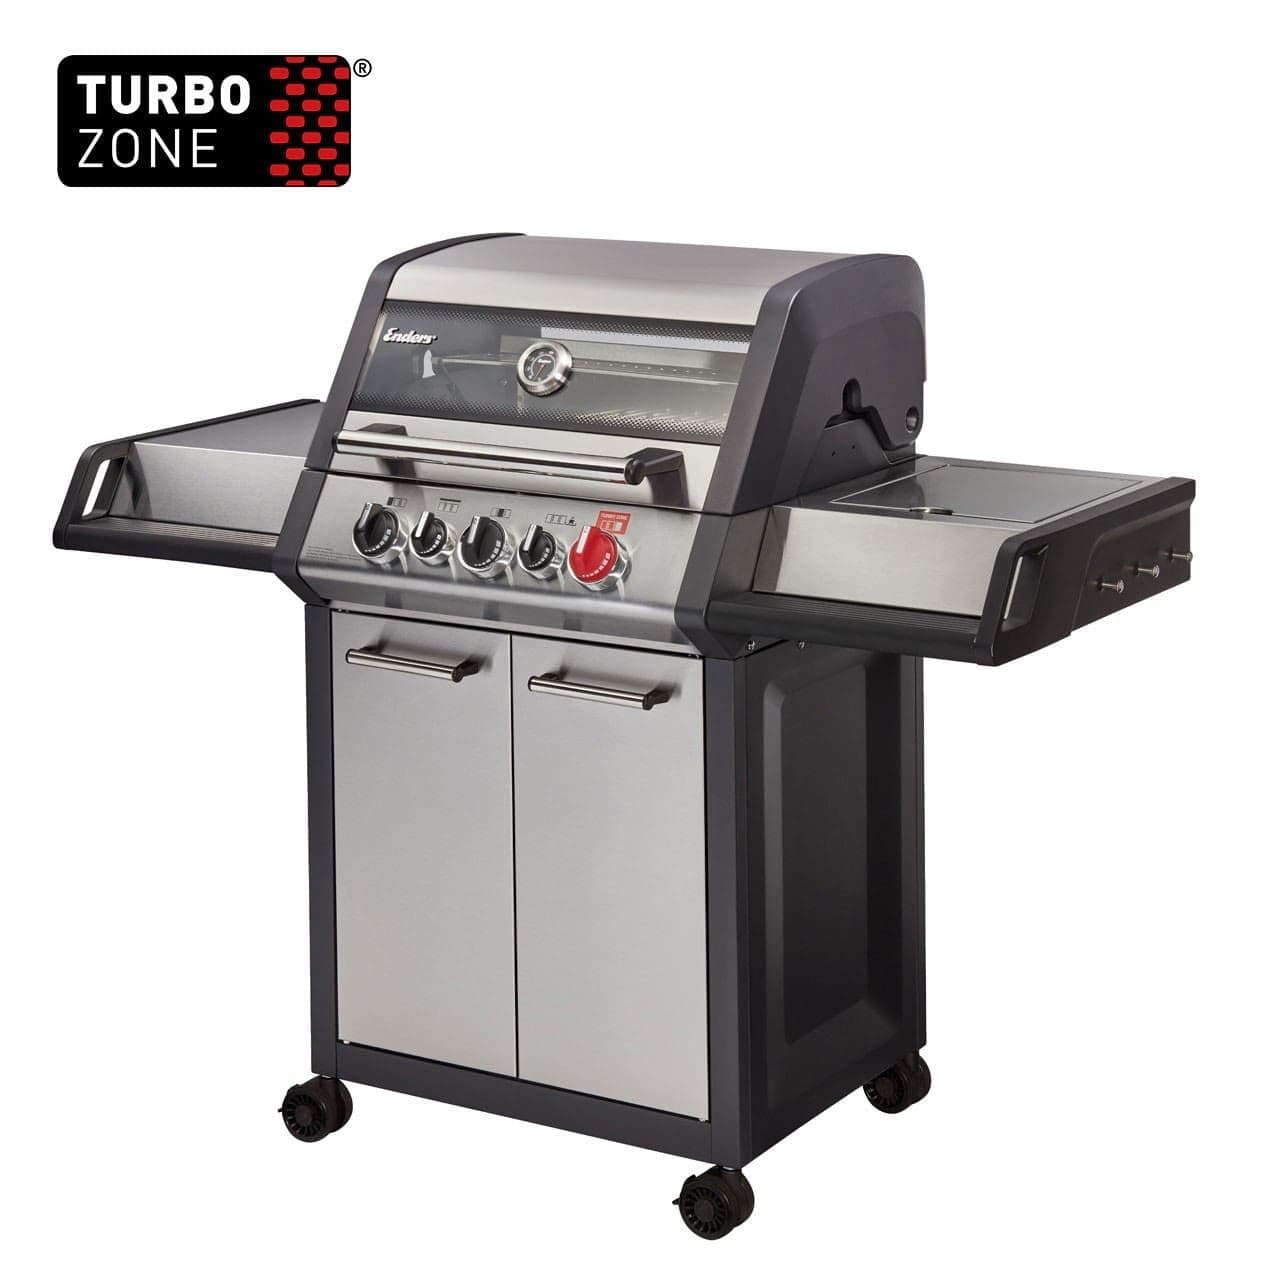 EN83766Enders® Monroe Pro 3 Sik Turbo Gas Barbecue JD Catering Equipment Solutions Ltd